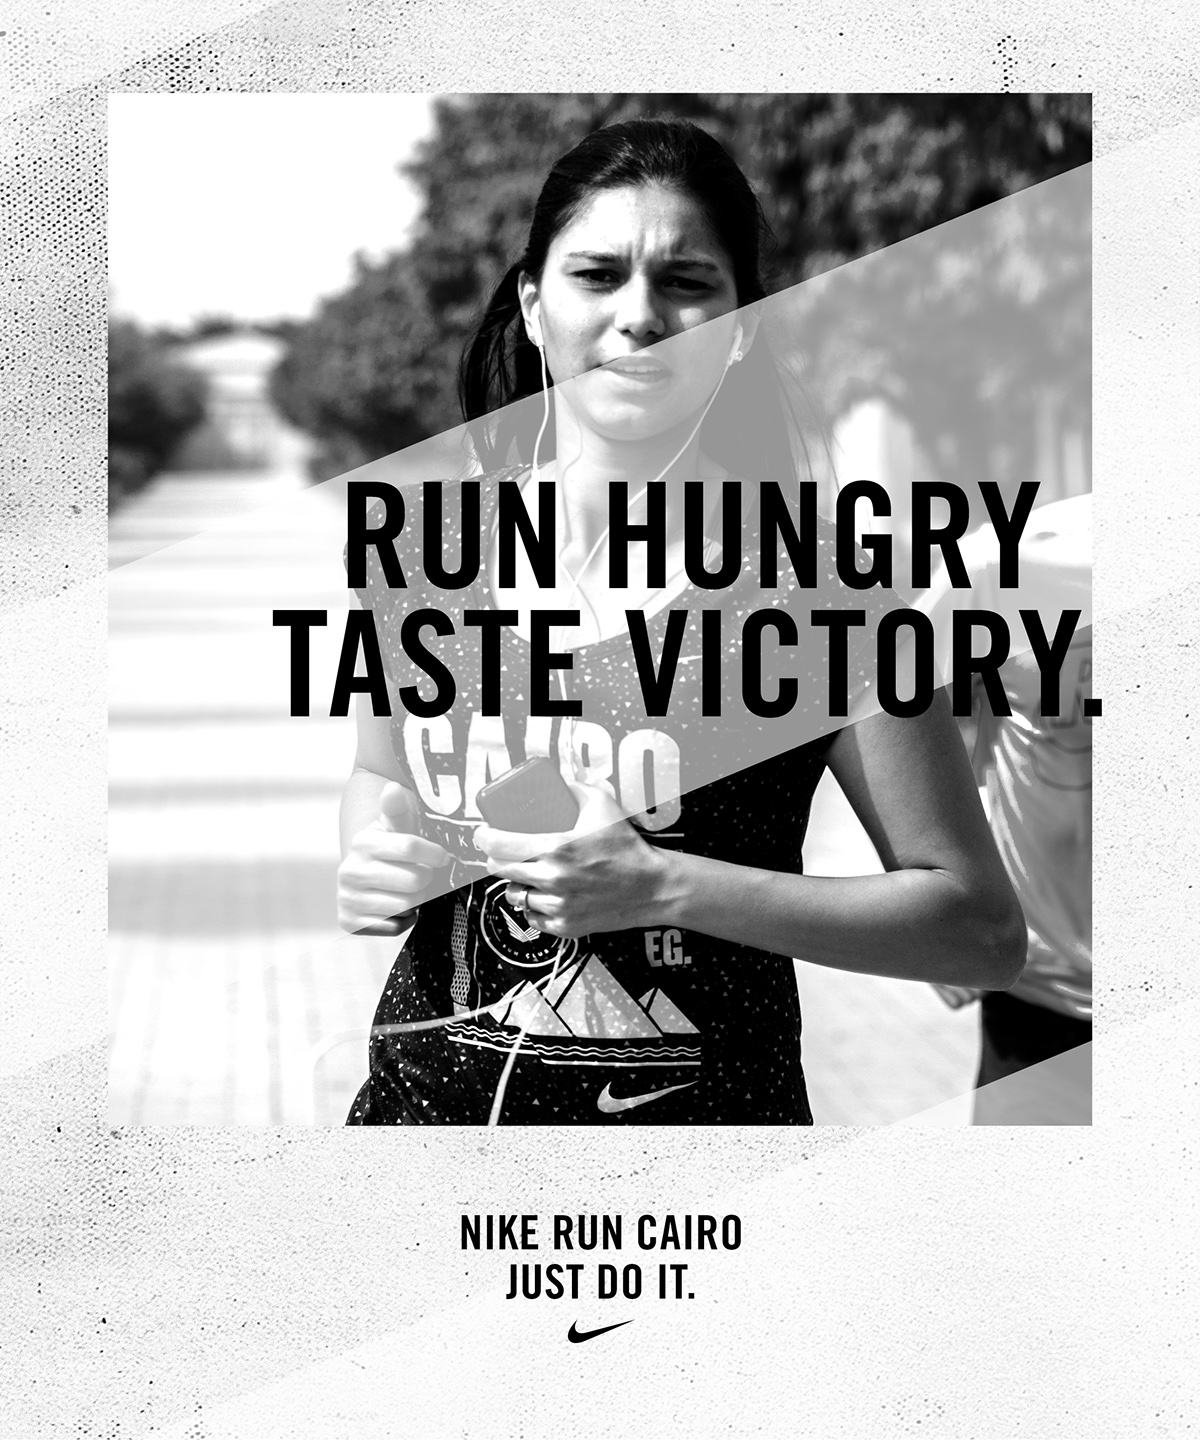 Nike nike run cairo logic events wady degla run sports